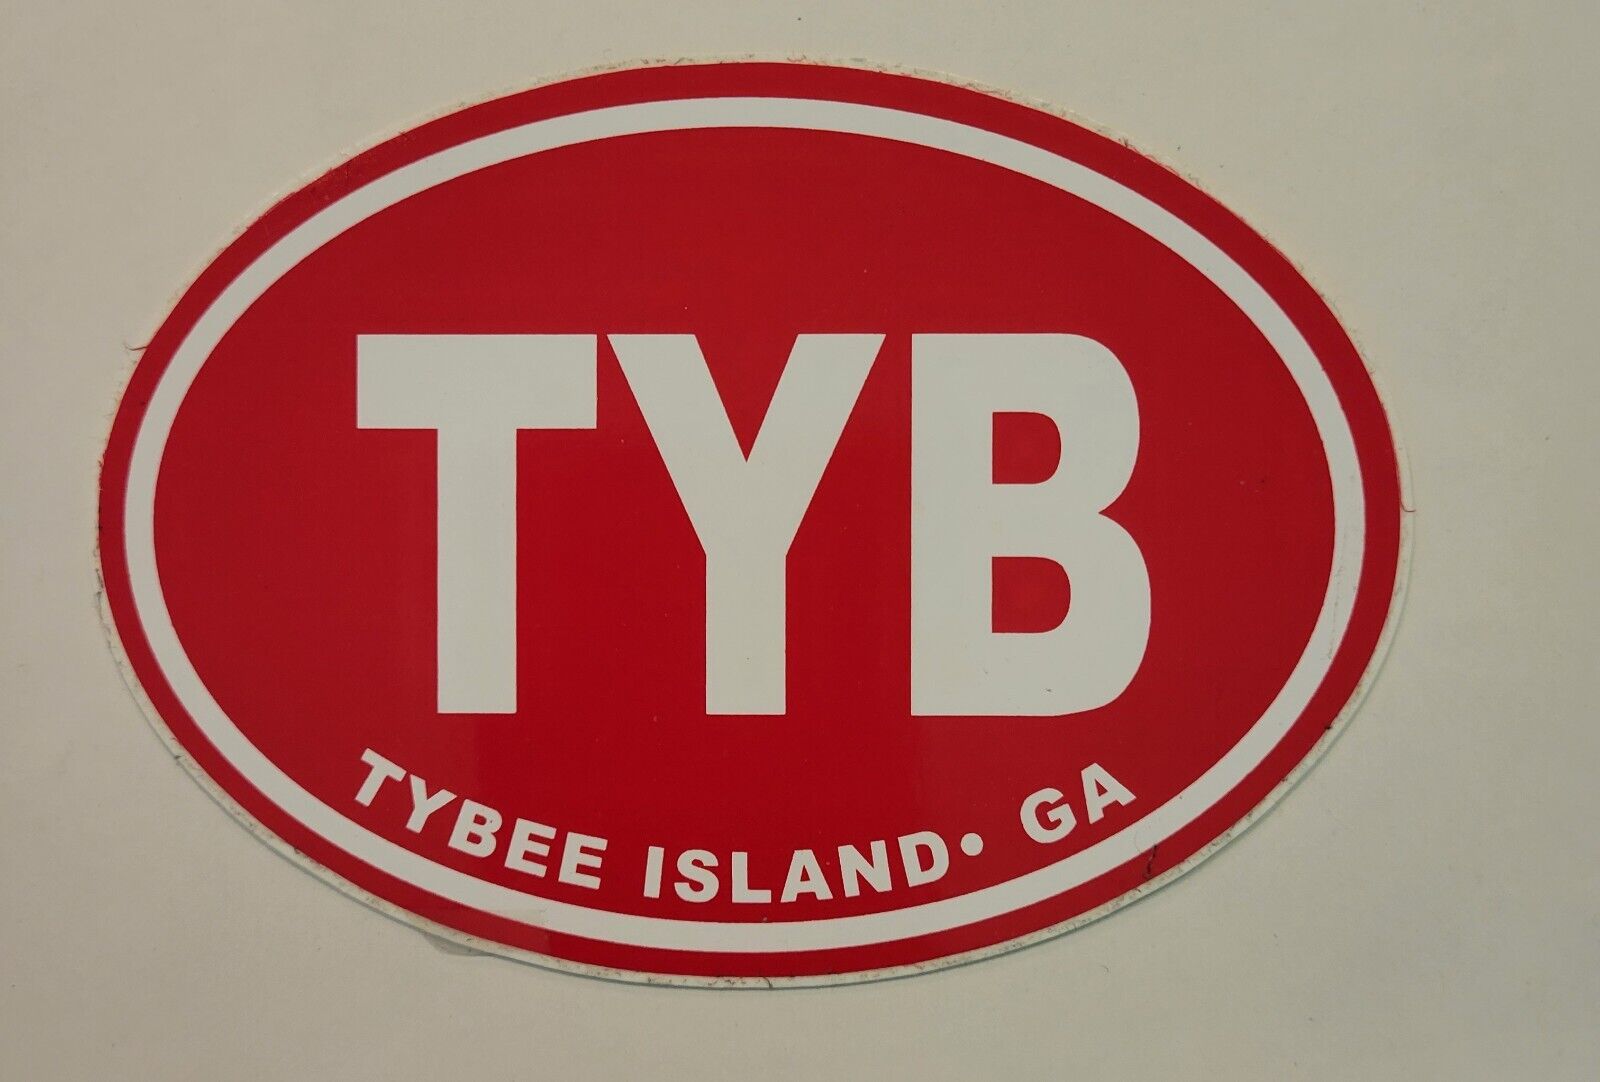 TYBEE ISLAND STICKER